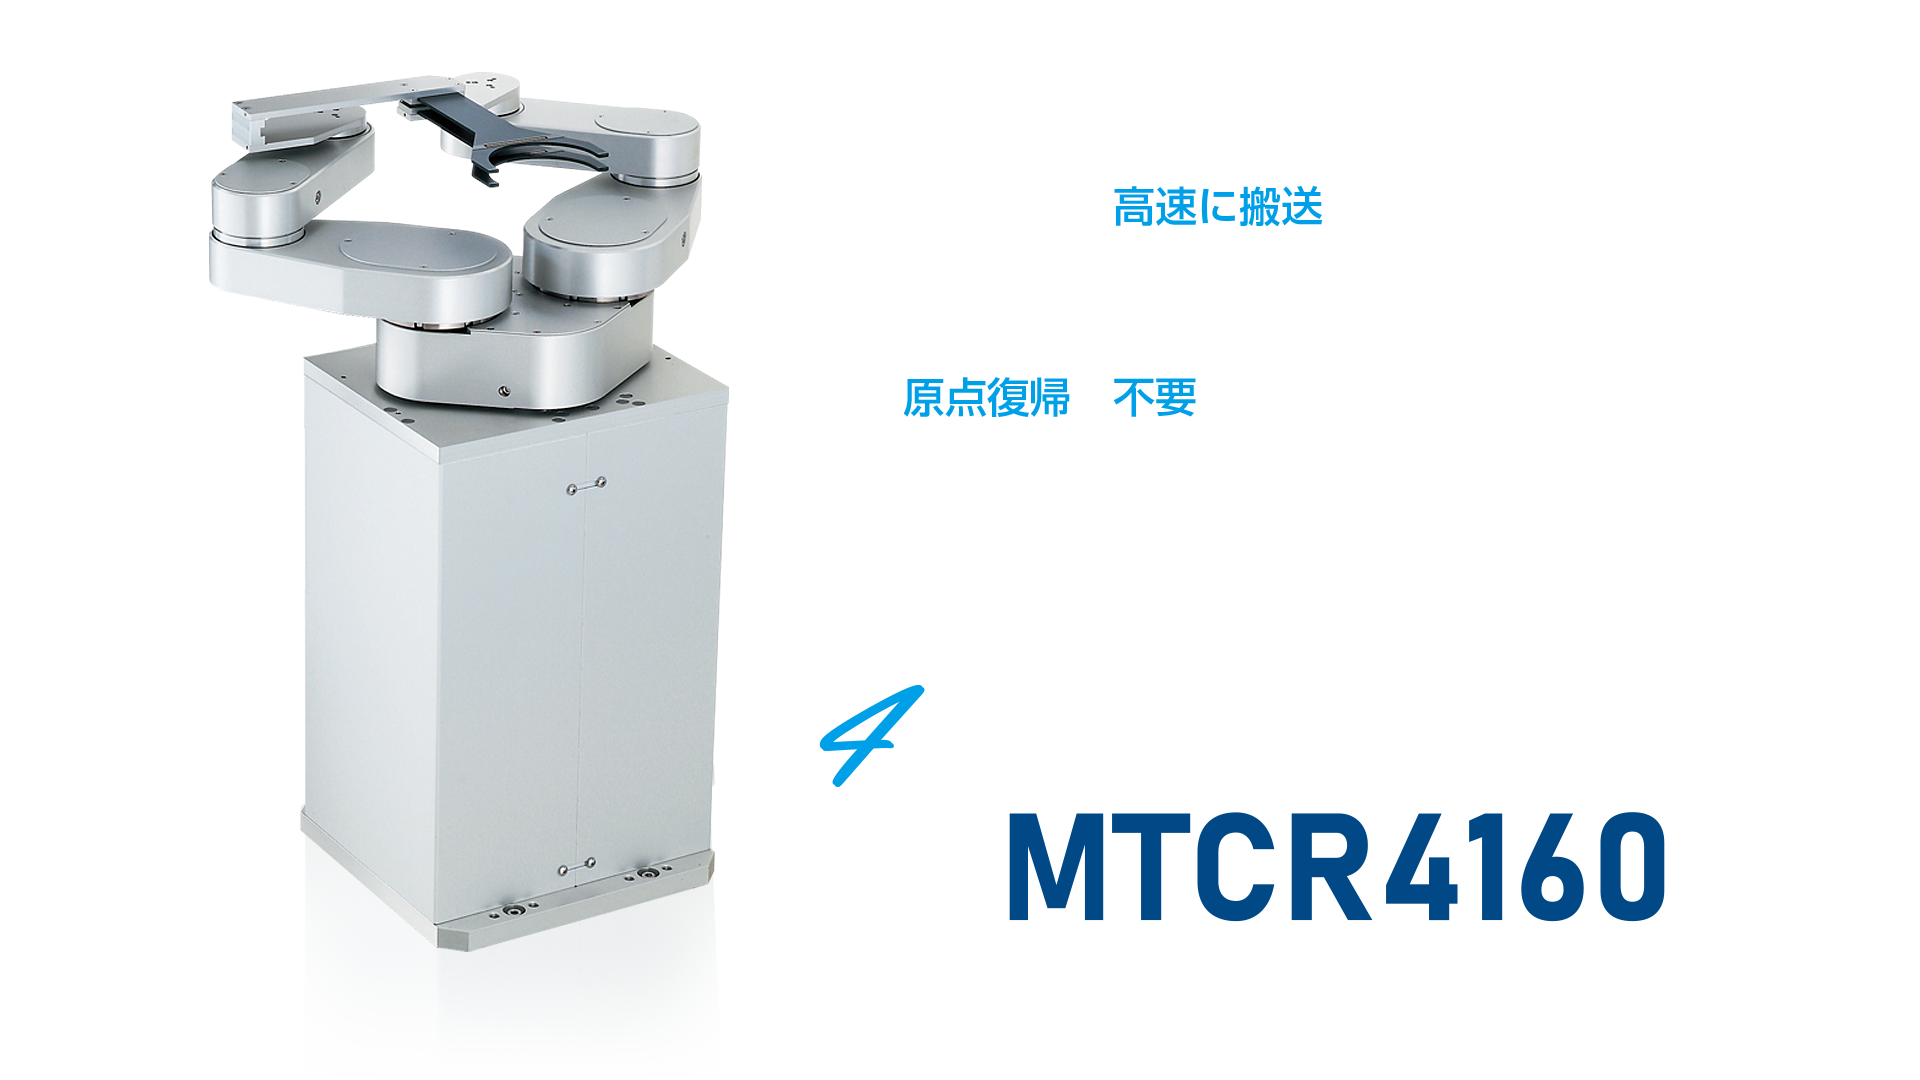 MTCR4160